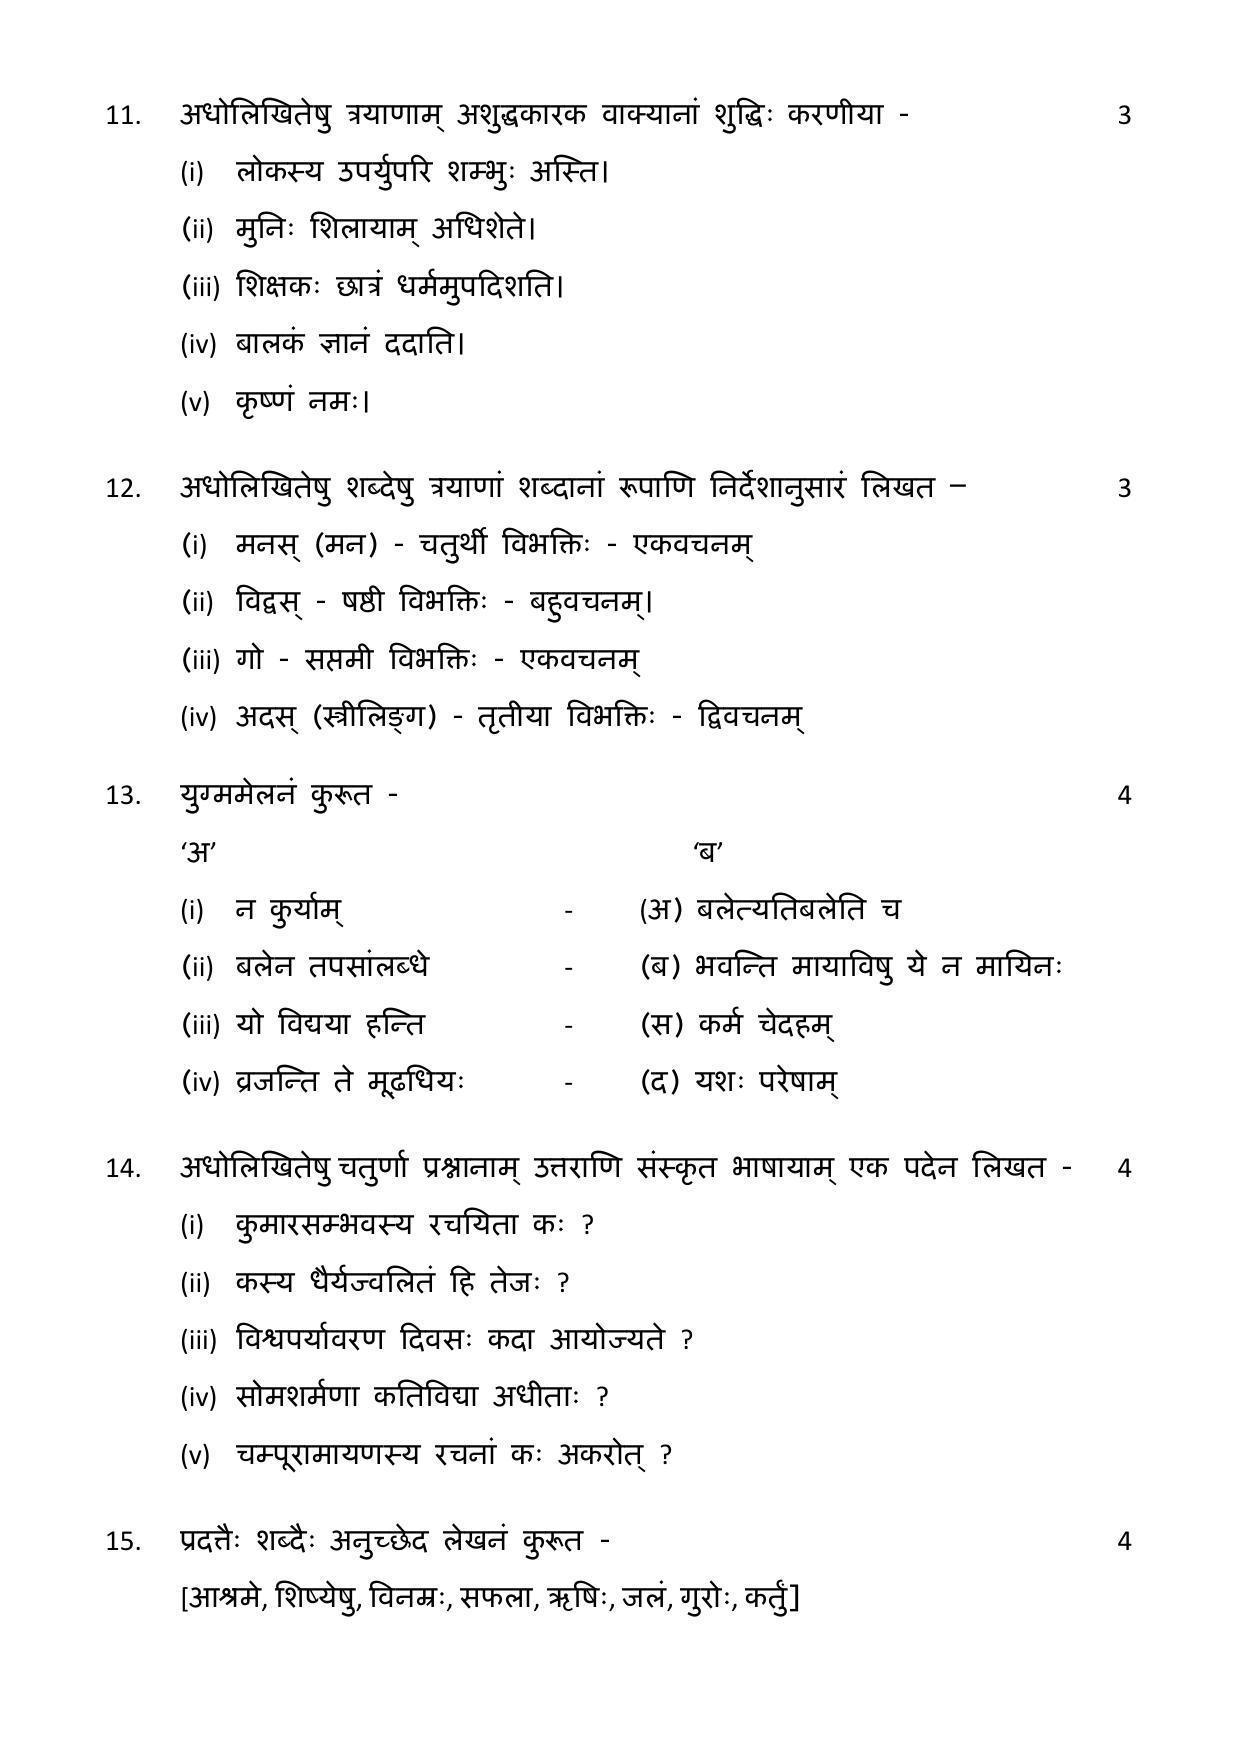 MP Board Class 12 Sanskrit 2019 Question Paper - Page 5